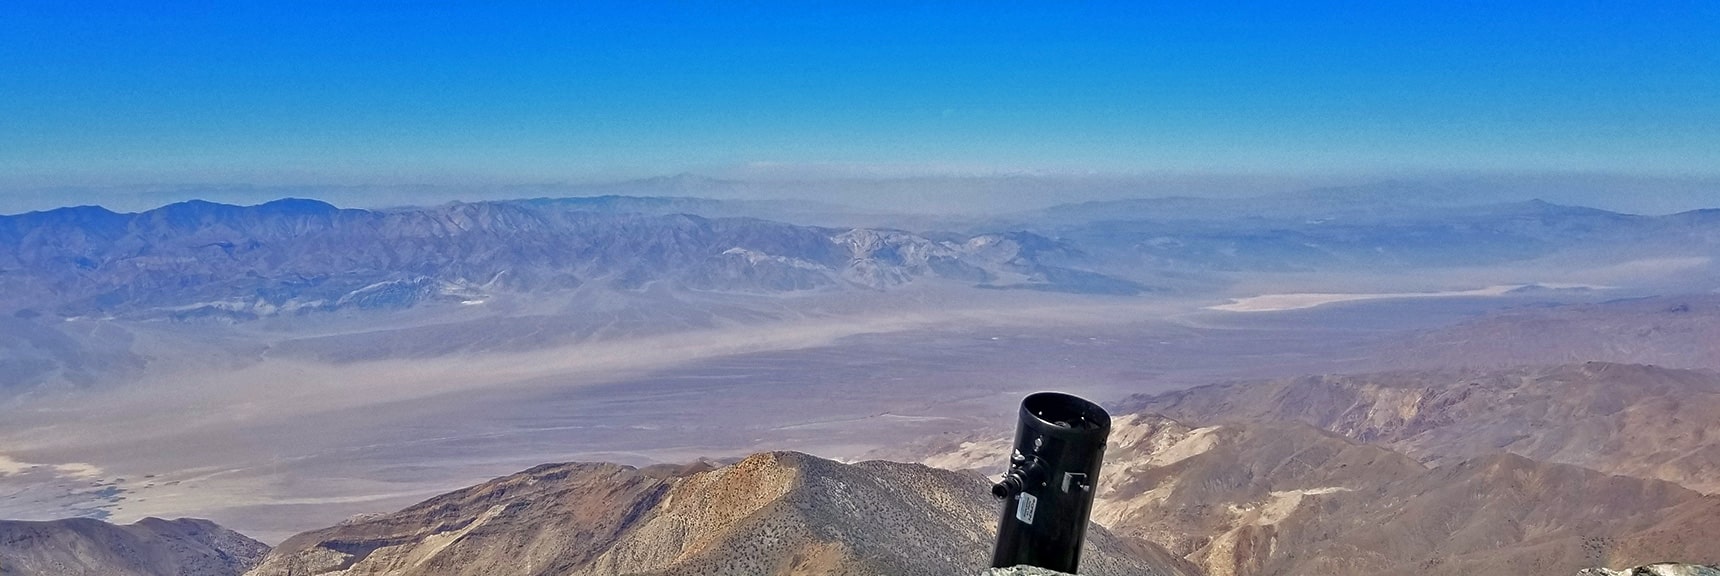 View Northwest from Telescope Peak Summit. Salten Sea Valley Below. Sierra Nevada Mts. Faint on Horizon | Telescope Peak Summit from Wildrose Charcoal Kilns Parking Area, Panamint Mountains, Death Valley National Park, California